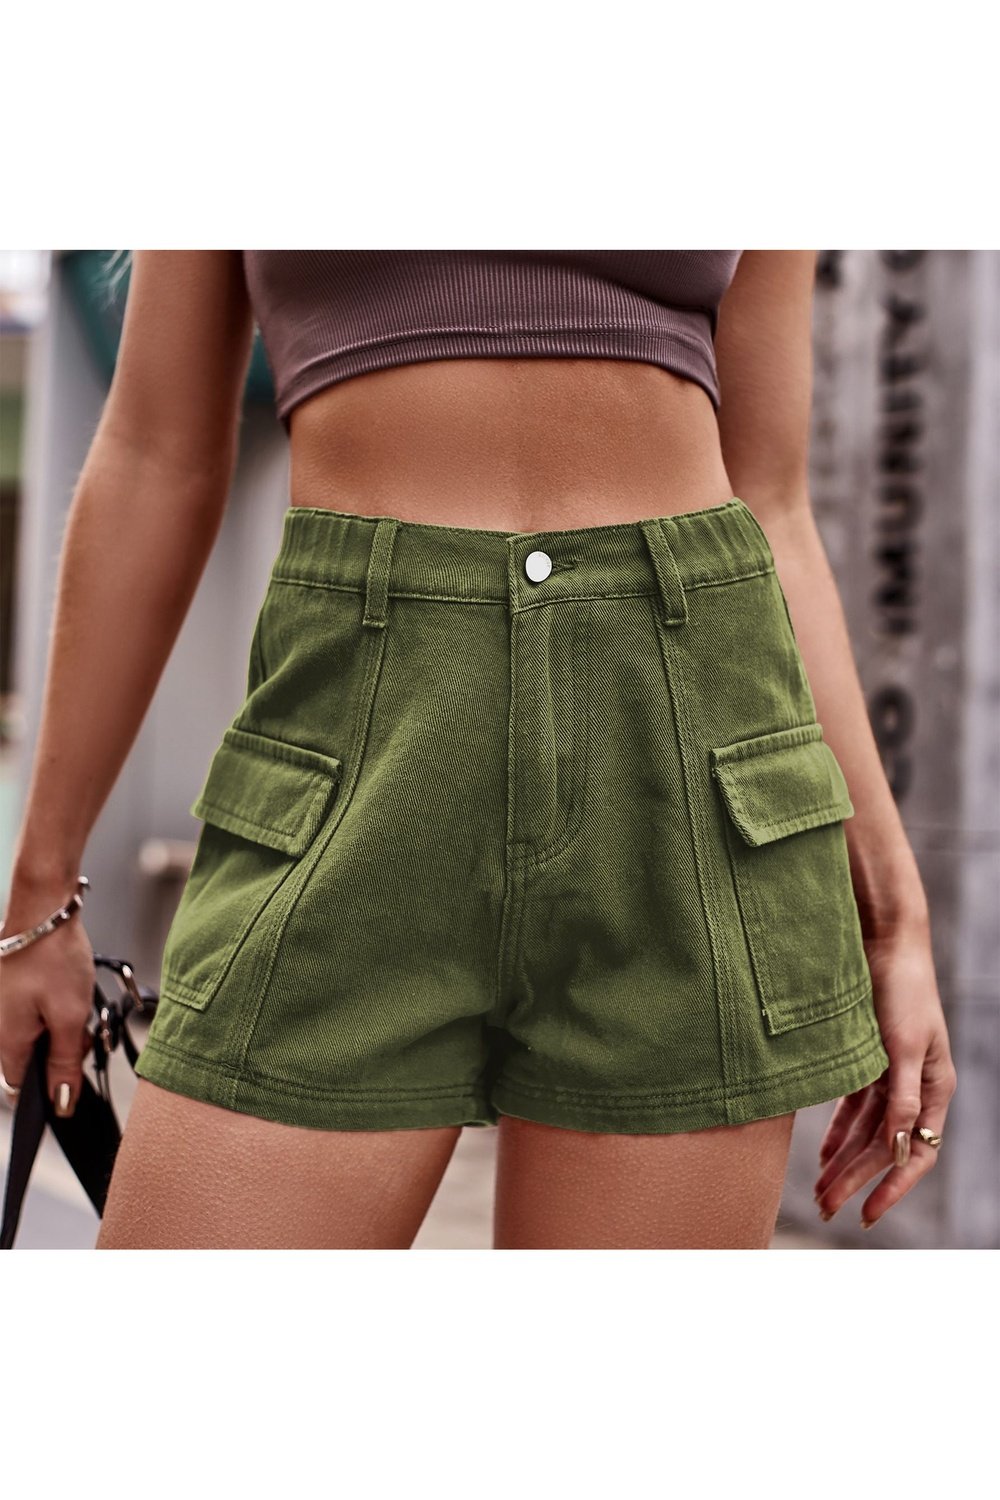 High-Waist Denim Shorts with Pockets - Denim Shorts - FITGGINS